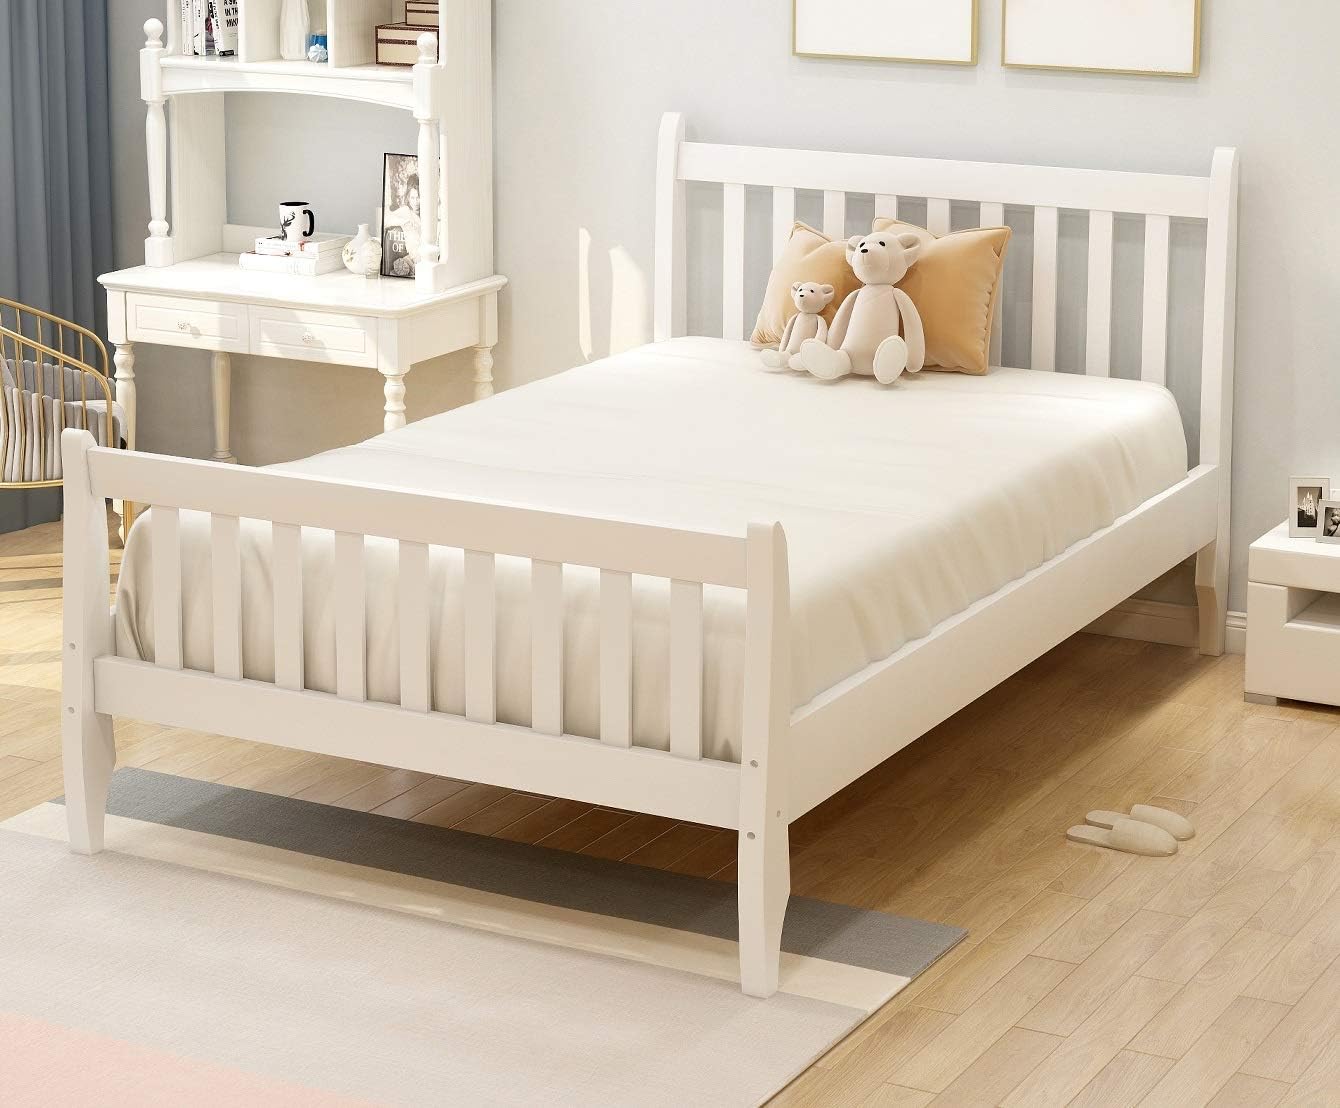 Rhomtree Twin Size Wood Platform Bed - Twin Beds for Kids